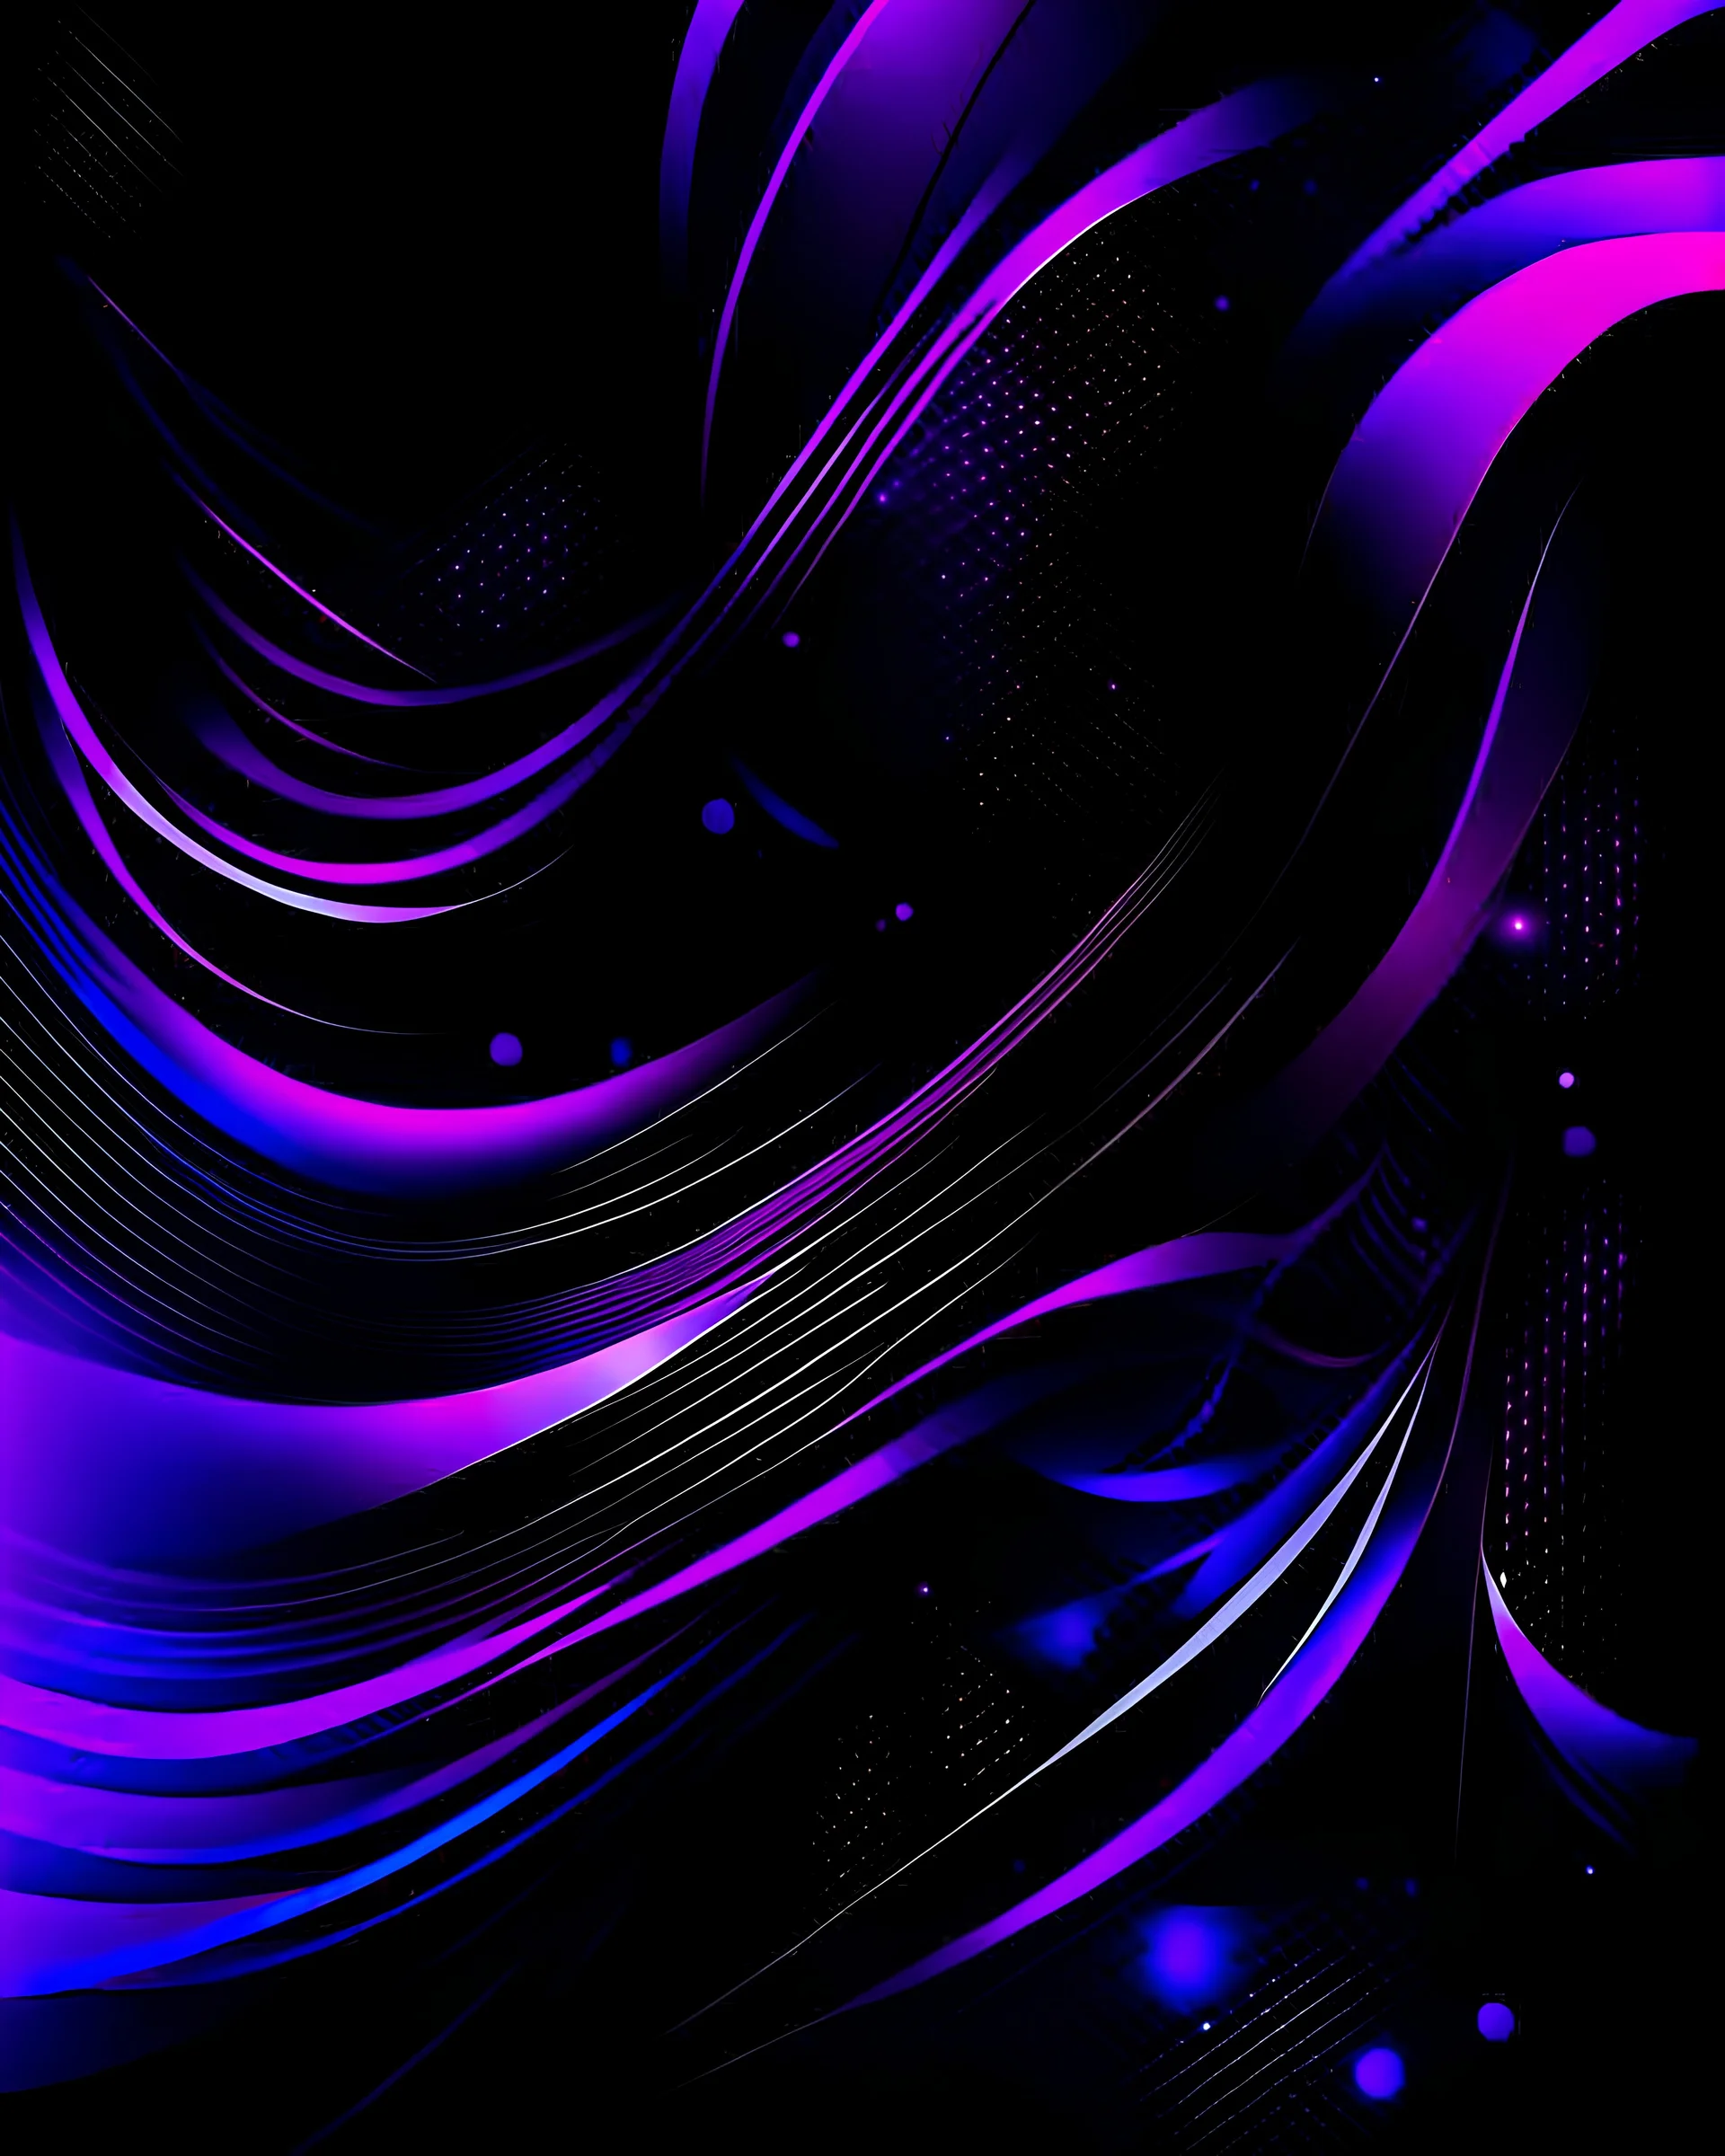 vectors violet to magenta with black background